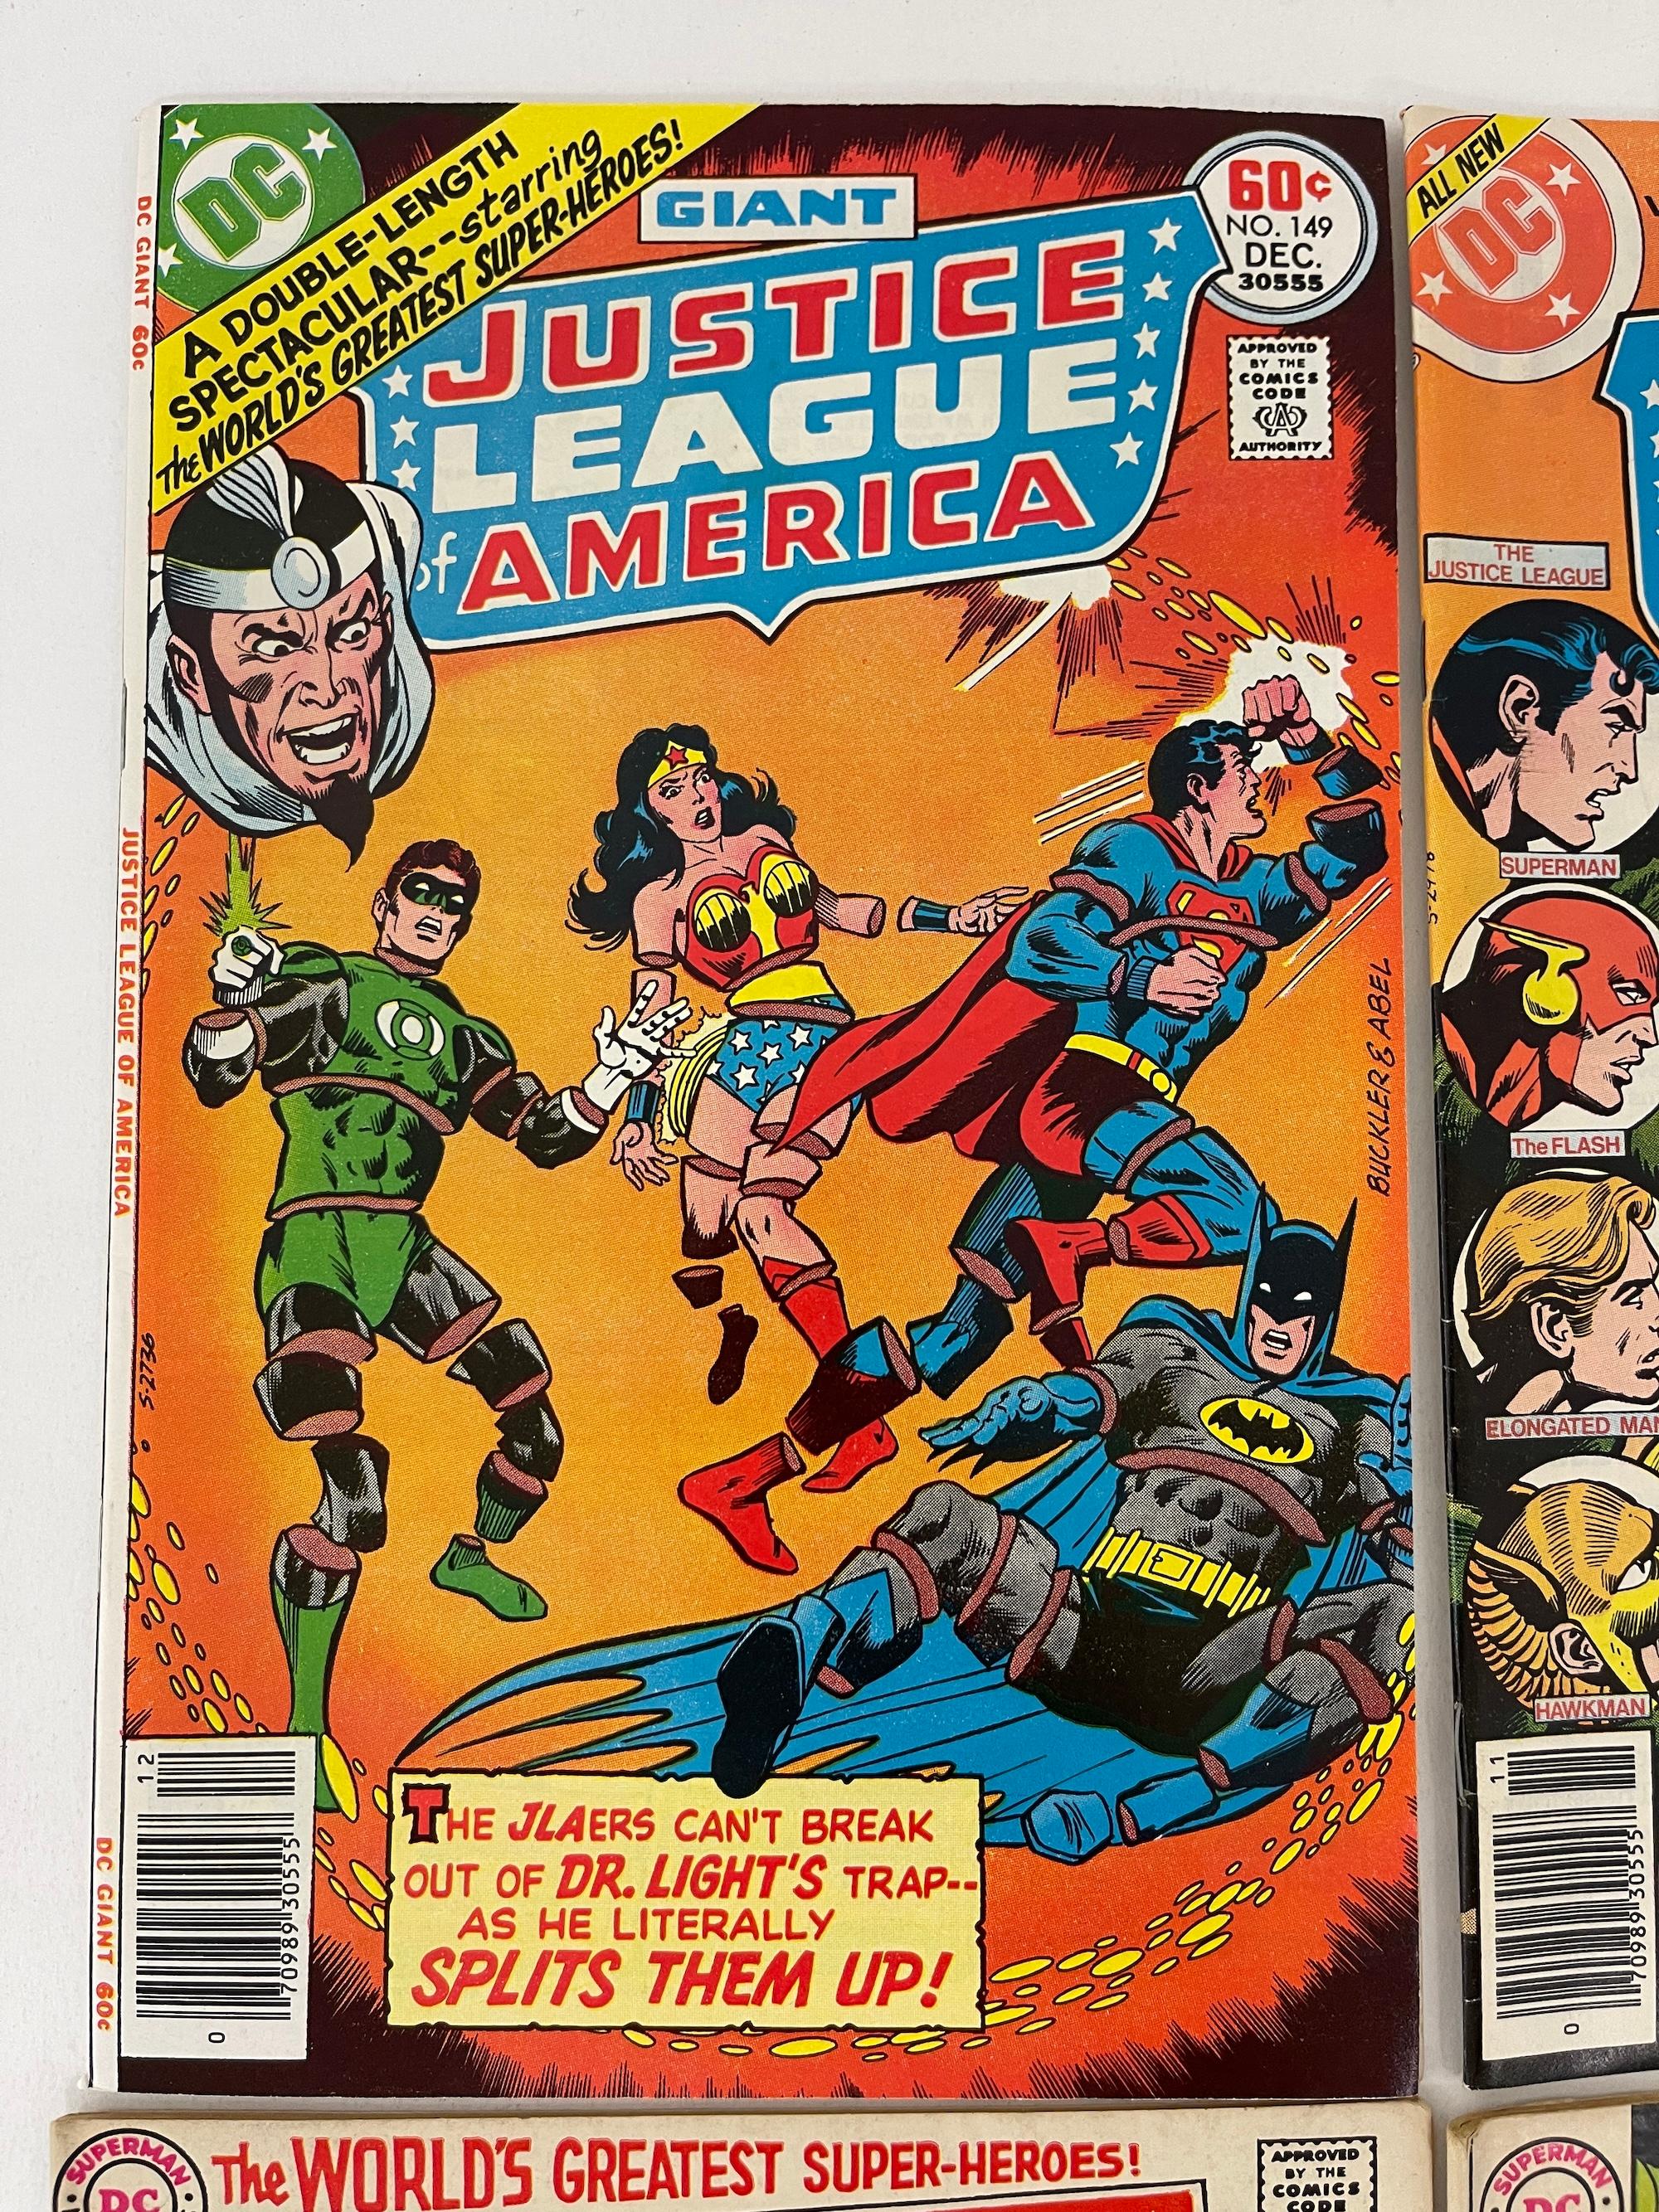 Vintage Justice League of America Comic Books